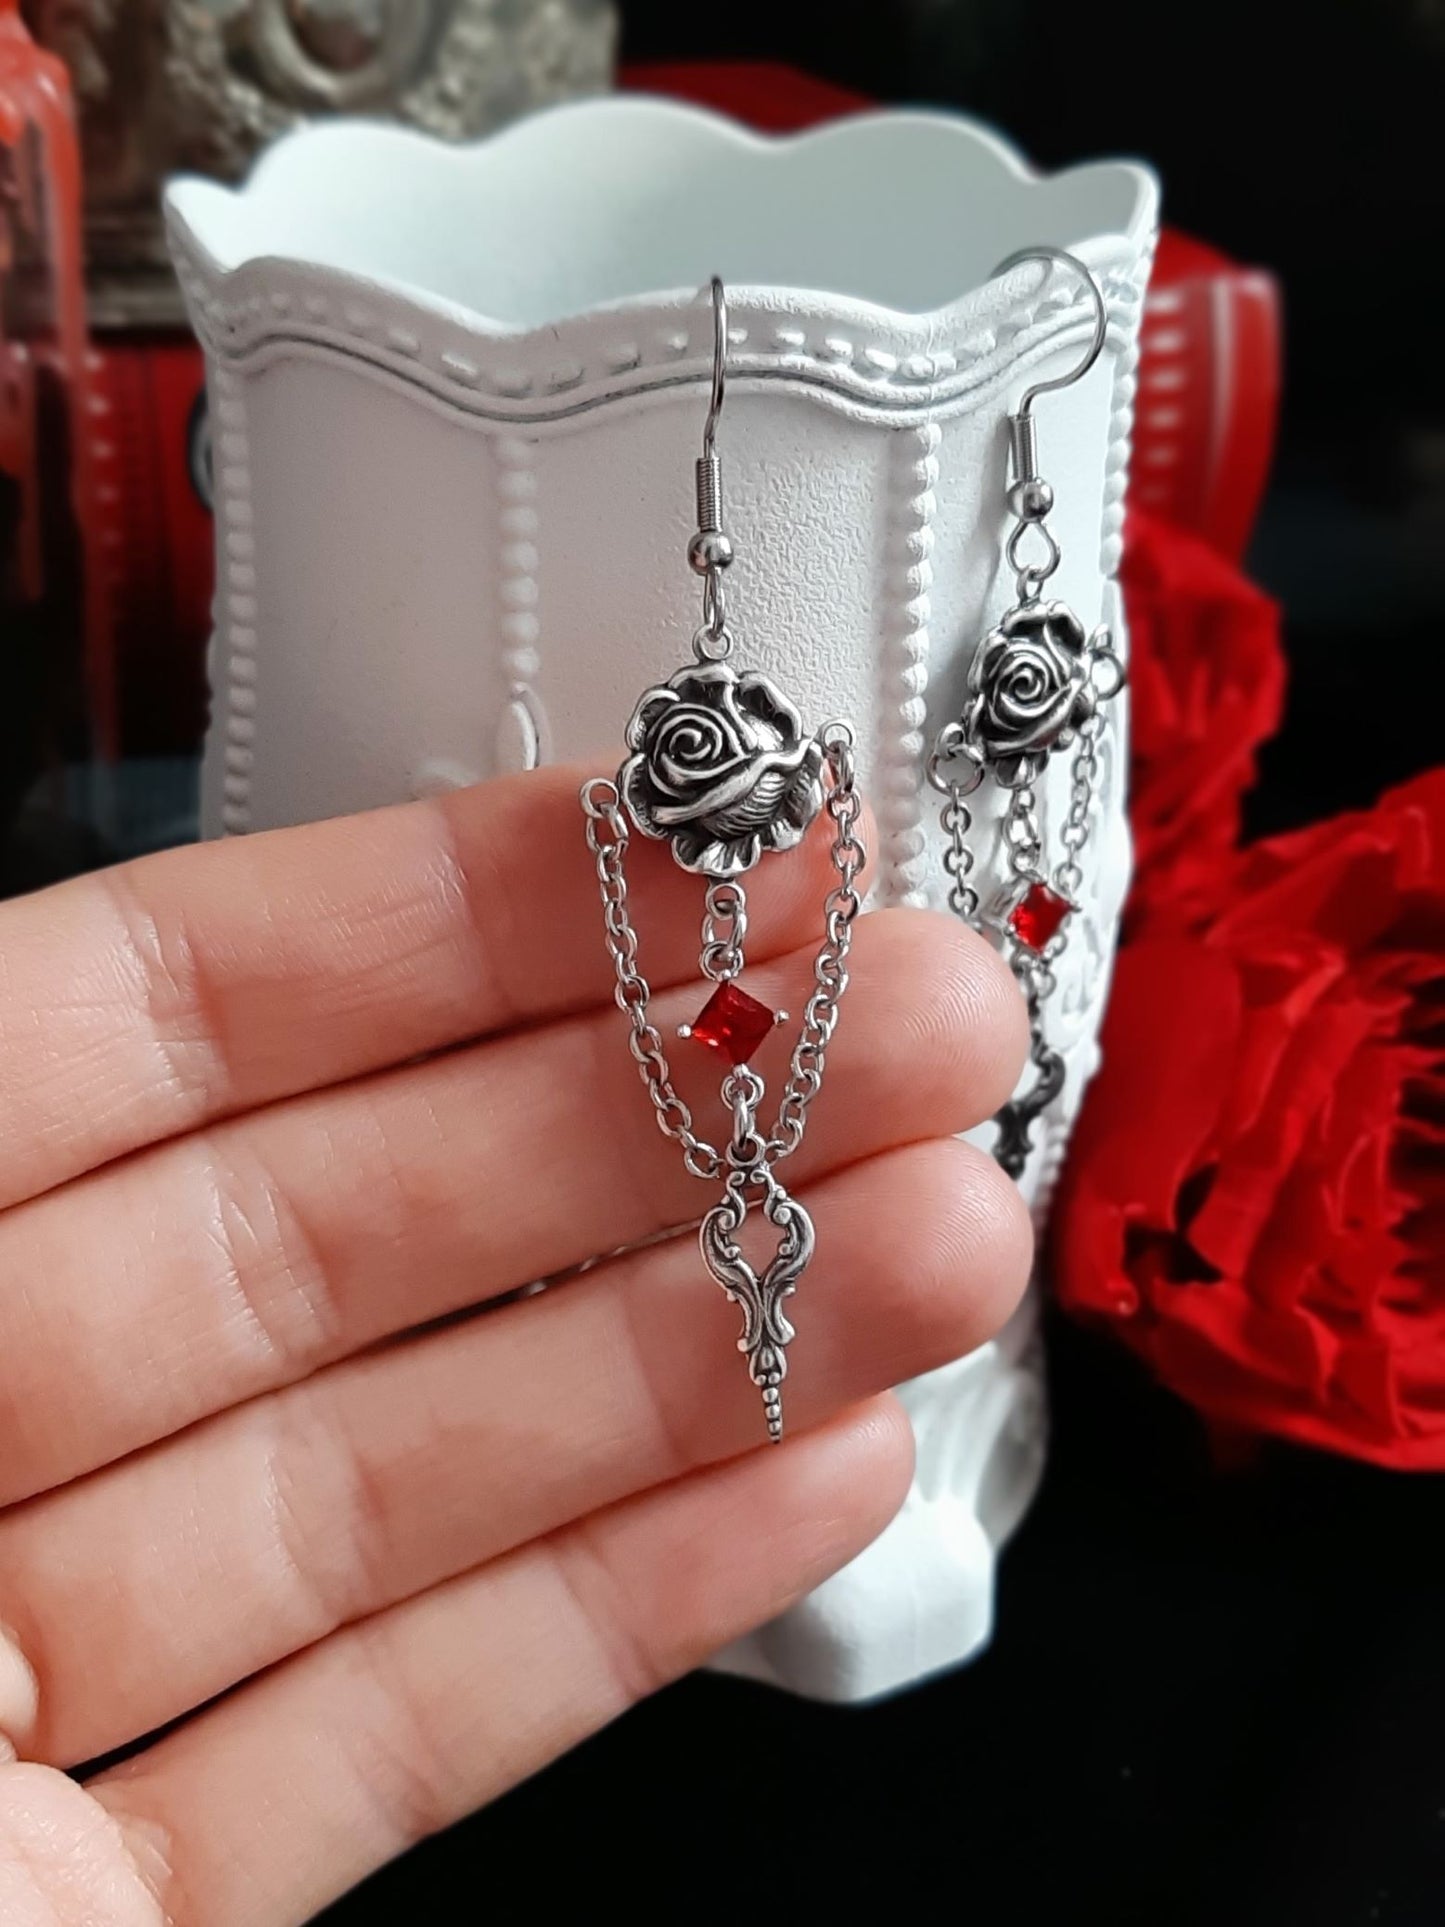 𝕻𝖔𝖎𝖘𝖊 rose earrings